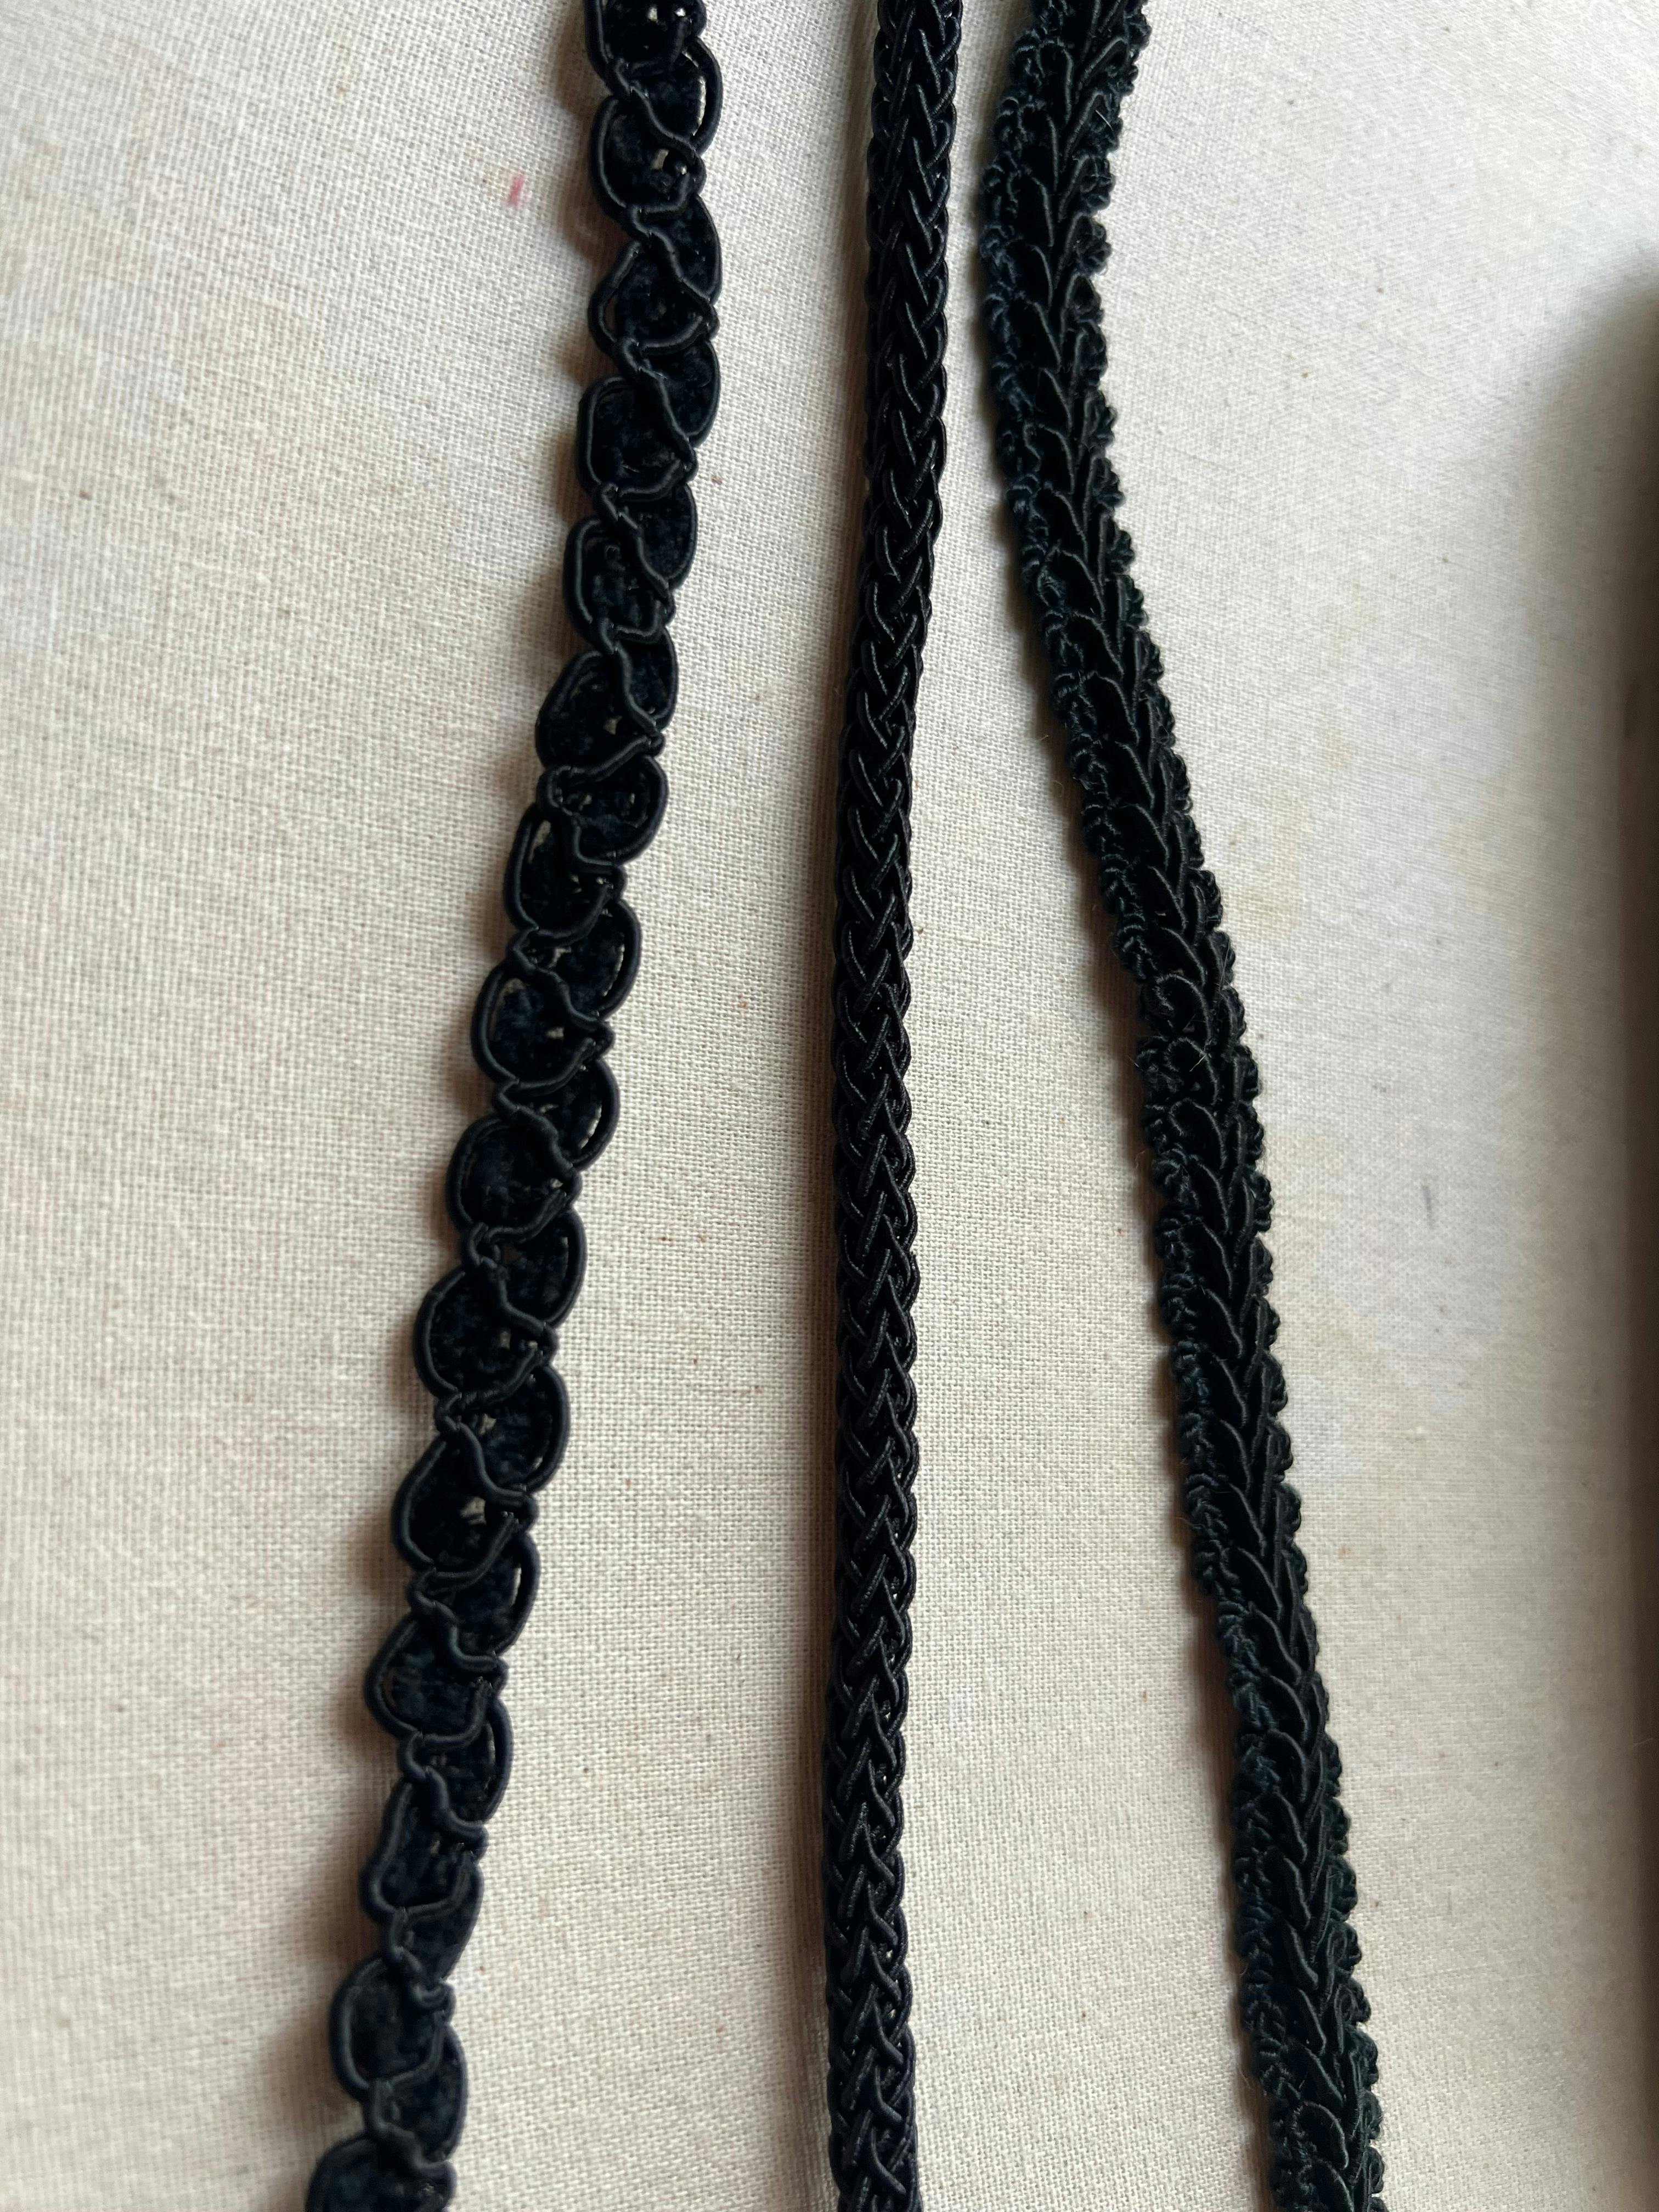 Three kinds of black braided cording.